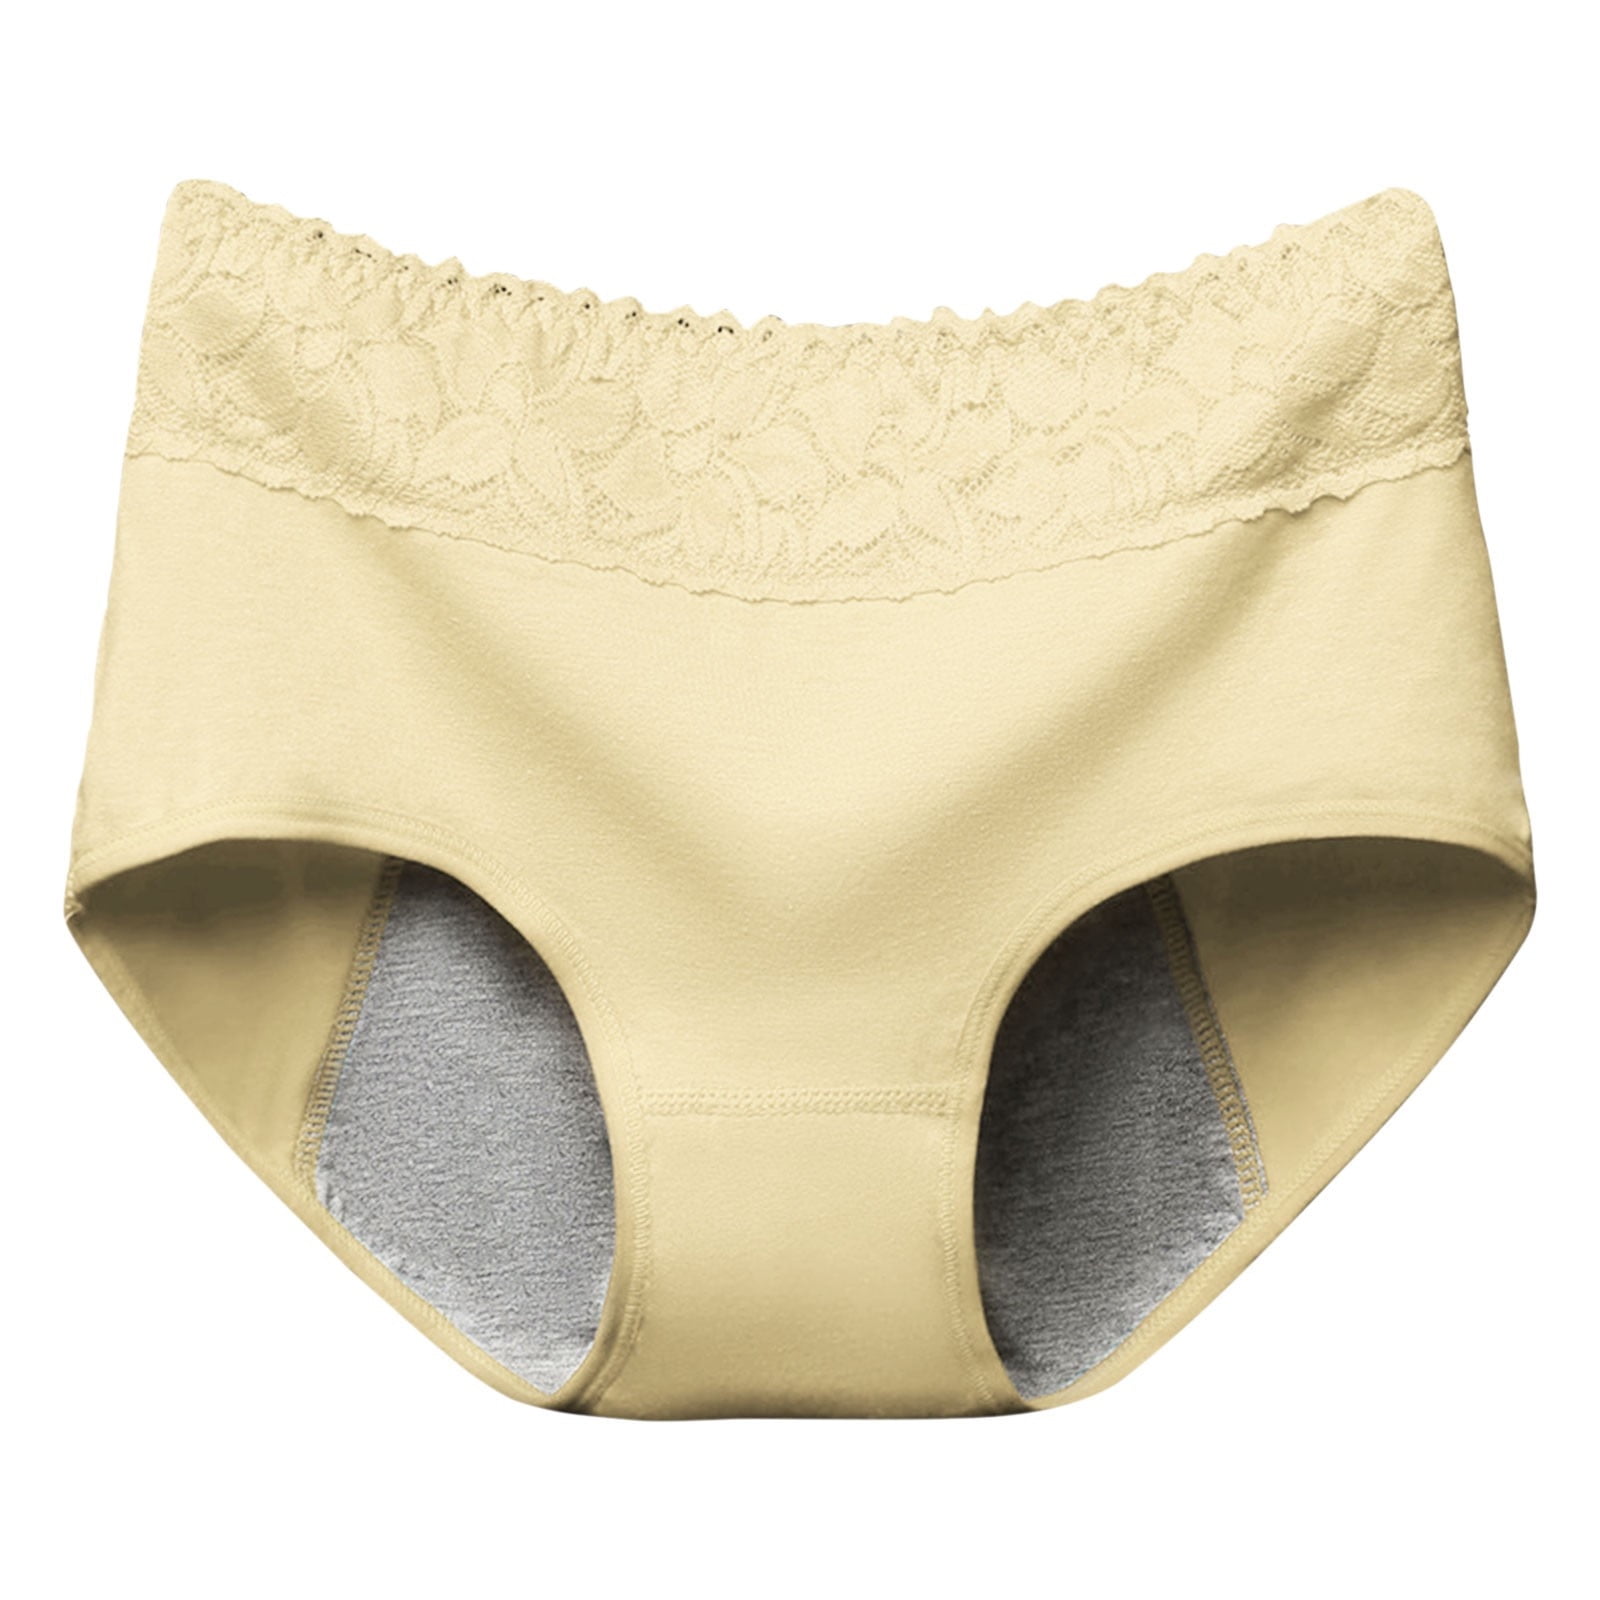 Airpow Clearance Leak Proof Underwear for Women 5Pc Women's Briefs  Comfortable Cotton High Waist Underwear Women Sexy Panties